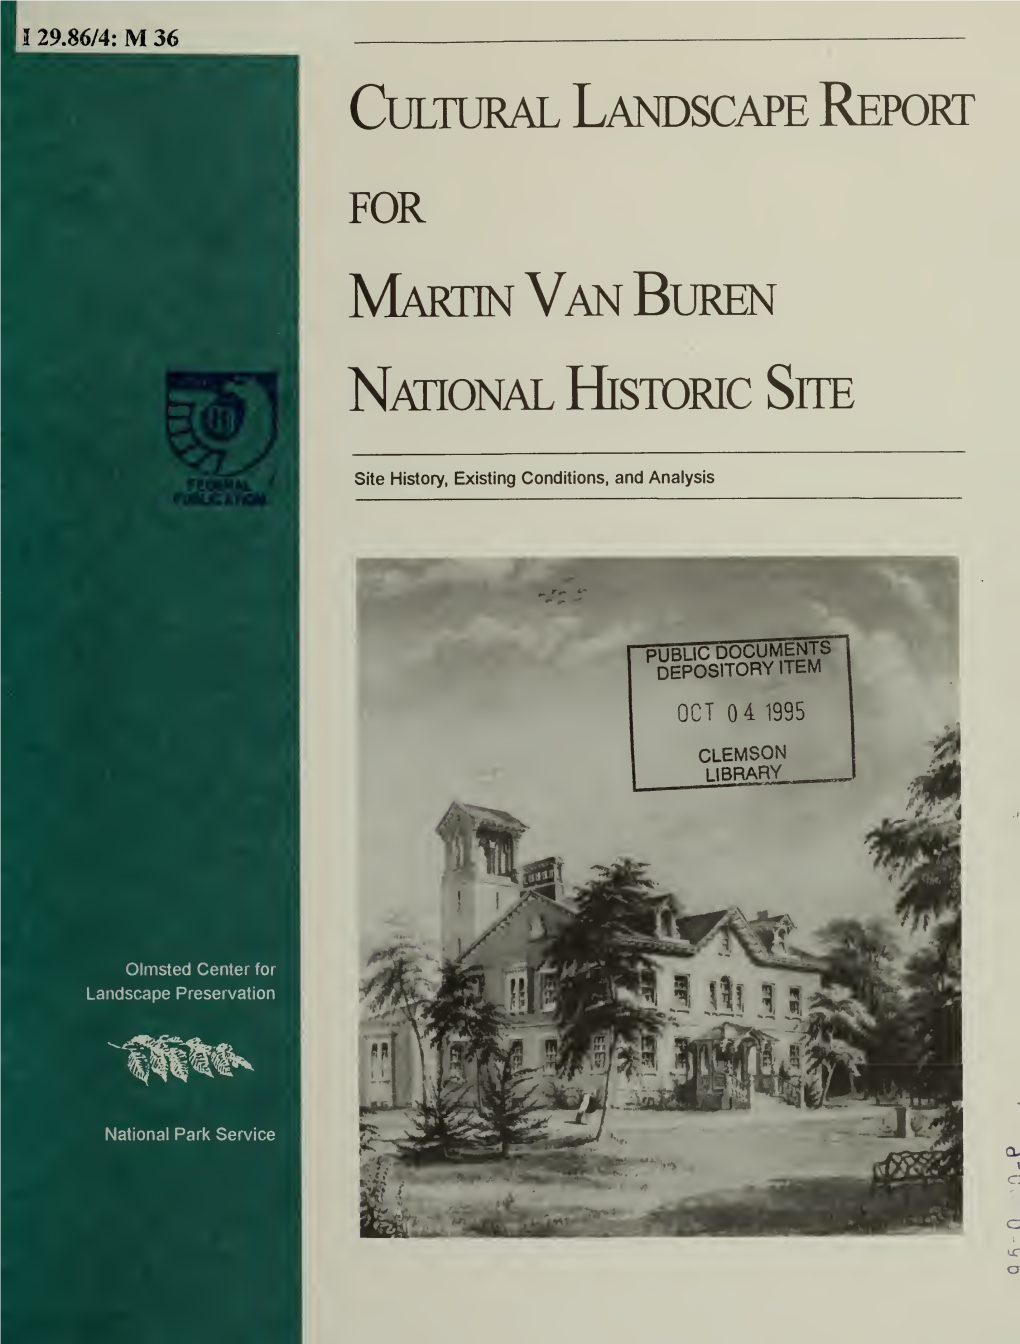 Cultural Landscape Report for Martin Van Buren National Historic Site